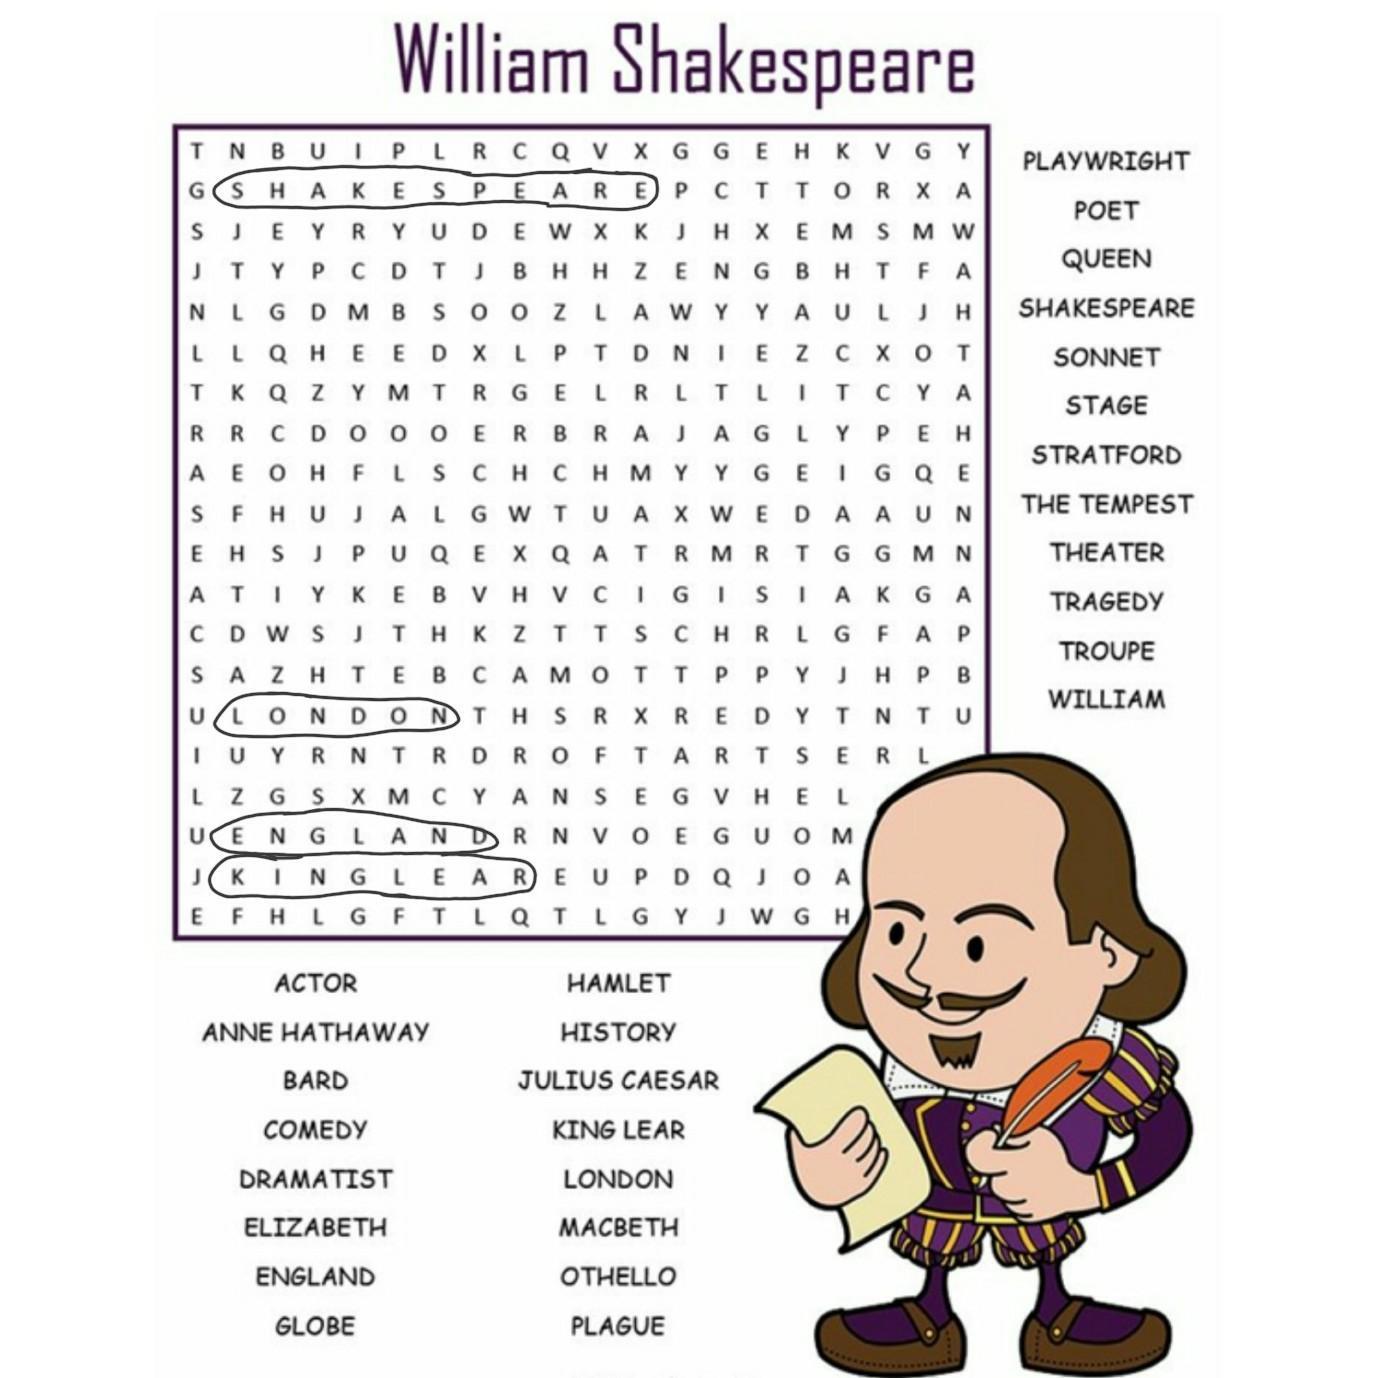 Crossword people. Шекспир задания на английском. Упражнения по теме Shakespeare. Задания по теме театр на английском языке. Wordsearch с заданием.